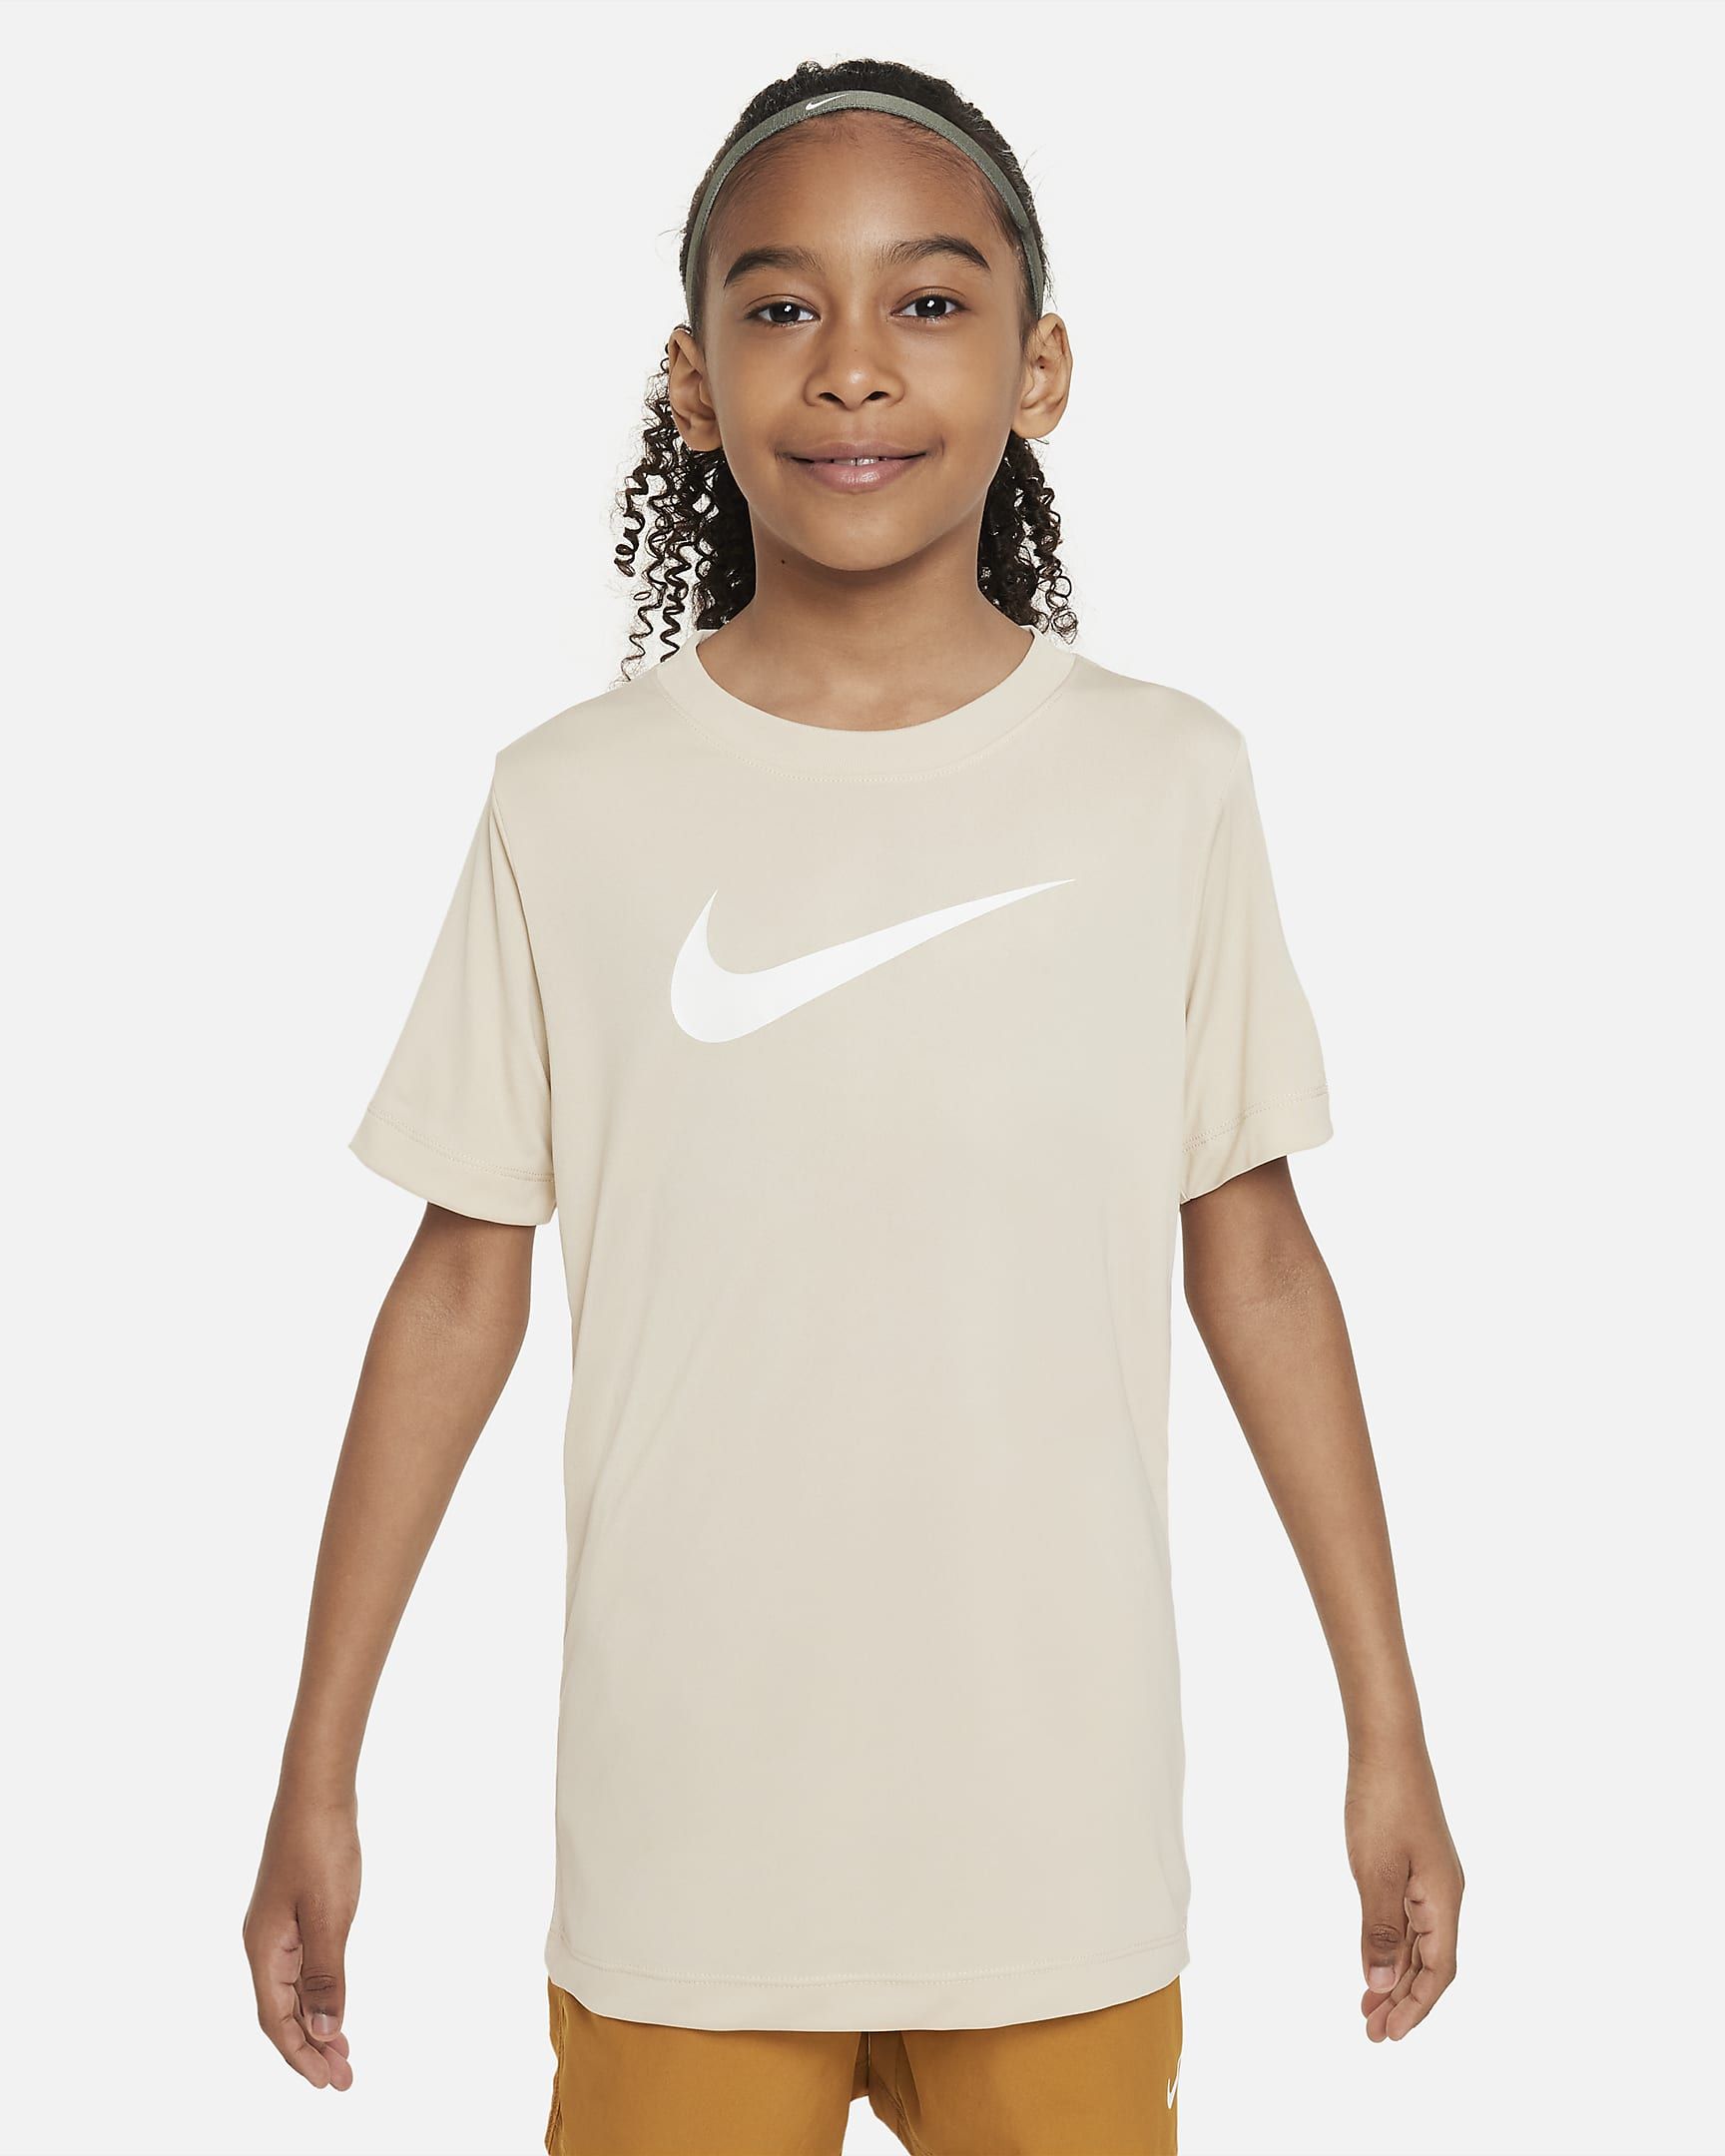 Nike Dri-FIT Legend Big Kids' (Boys') T-Shirt. Nike.com | Nike (US)